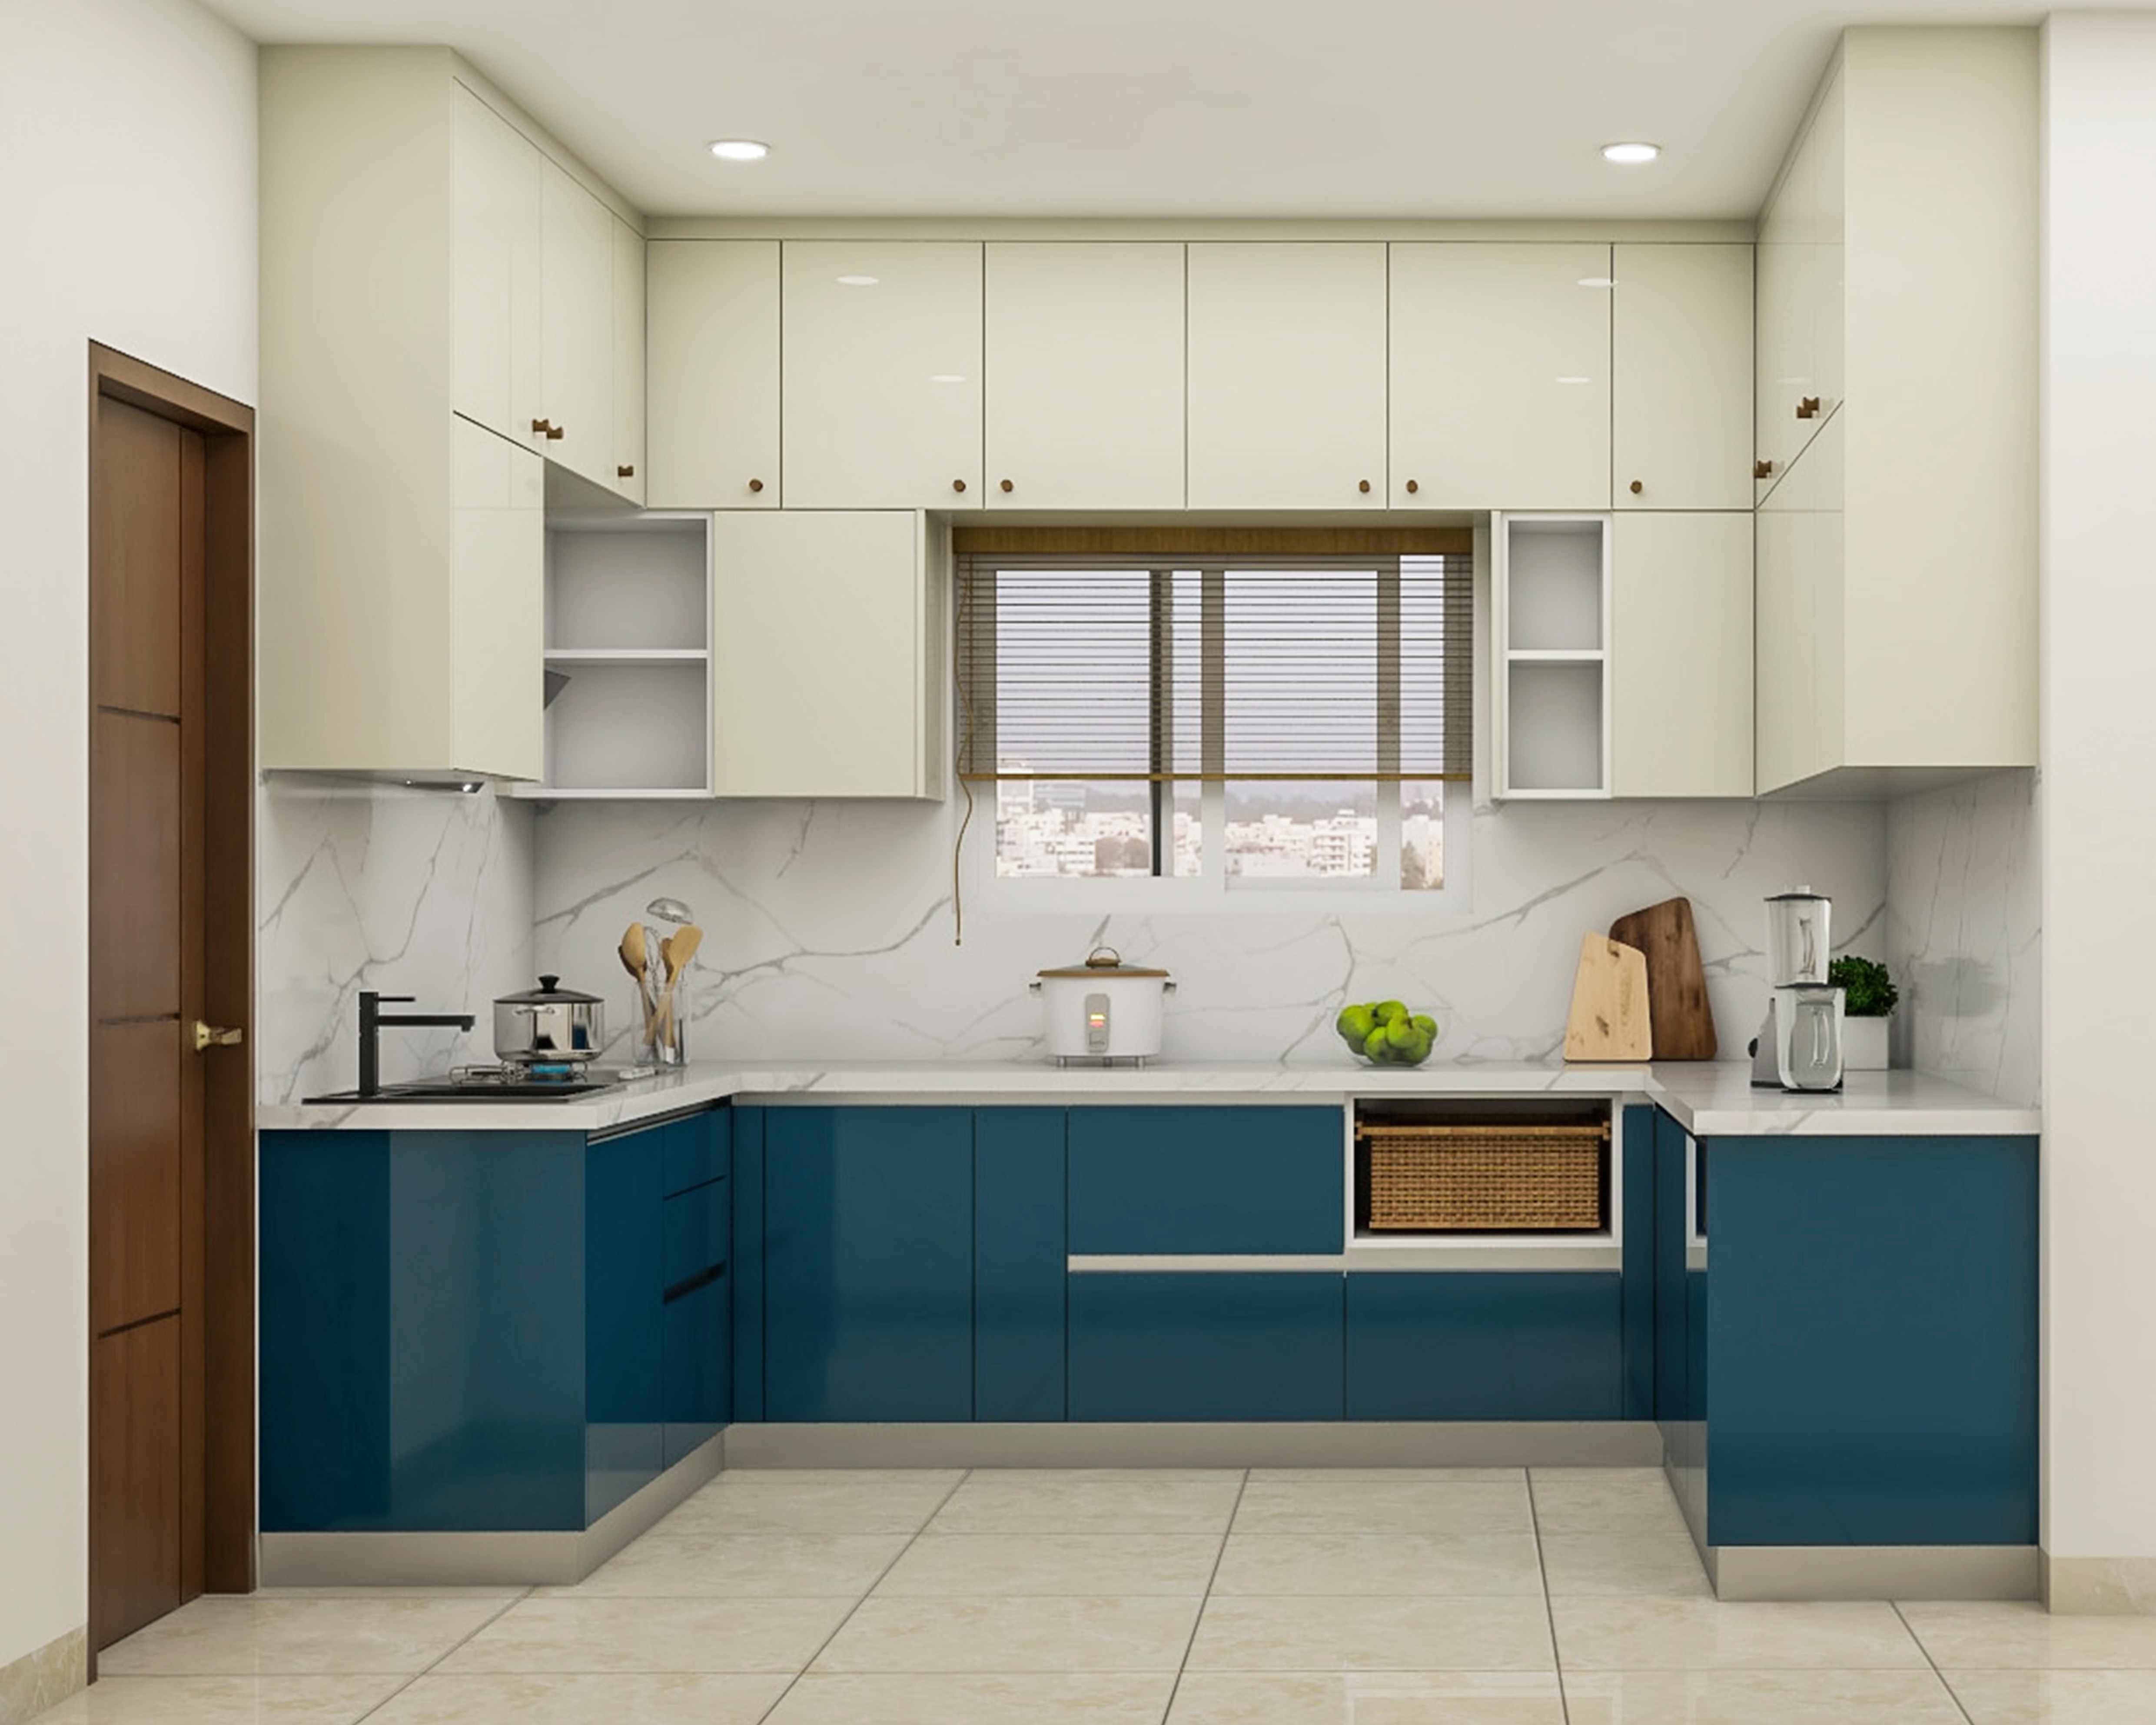 Modern U-Shaped Kitchen Design With White And Blue Storage Units